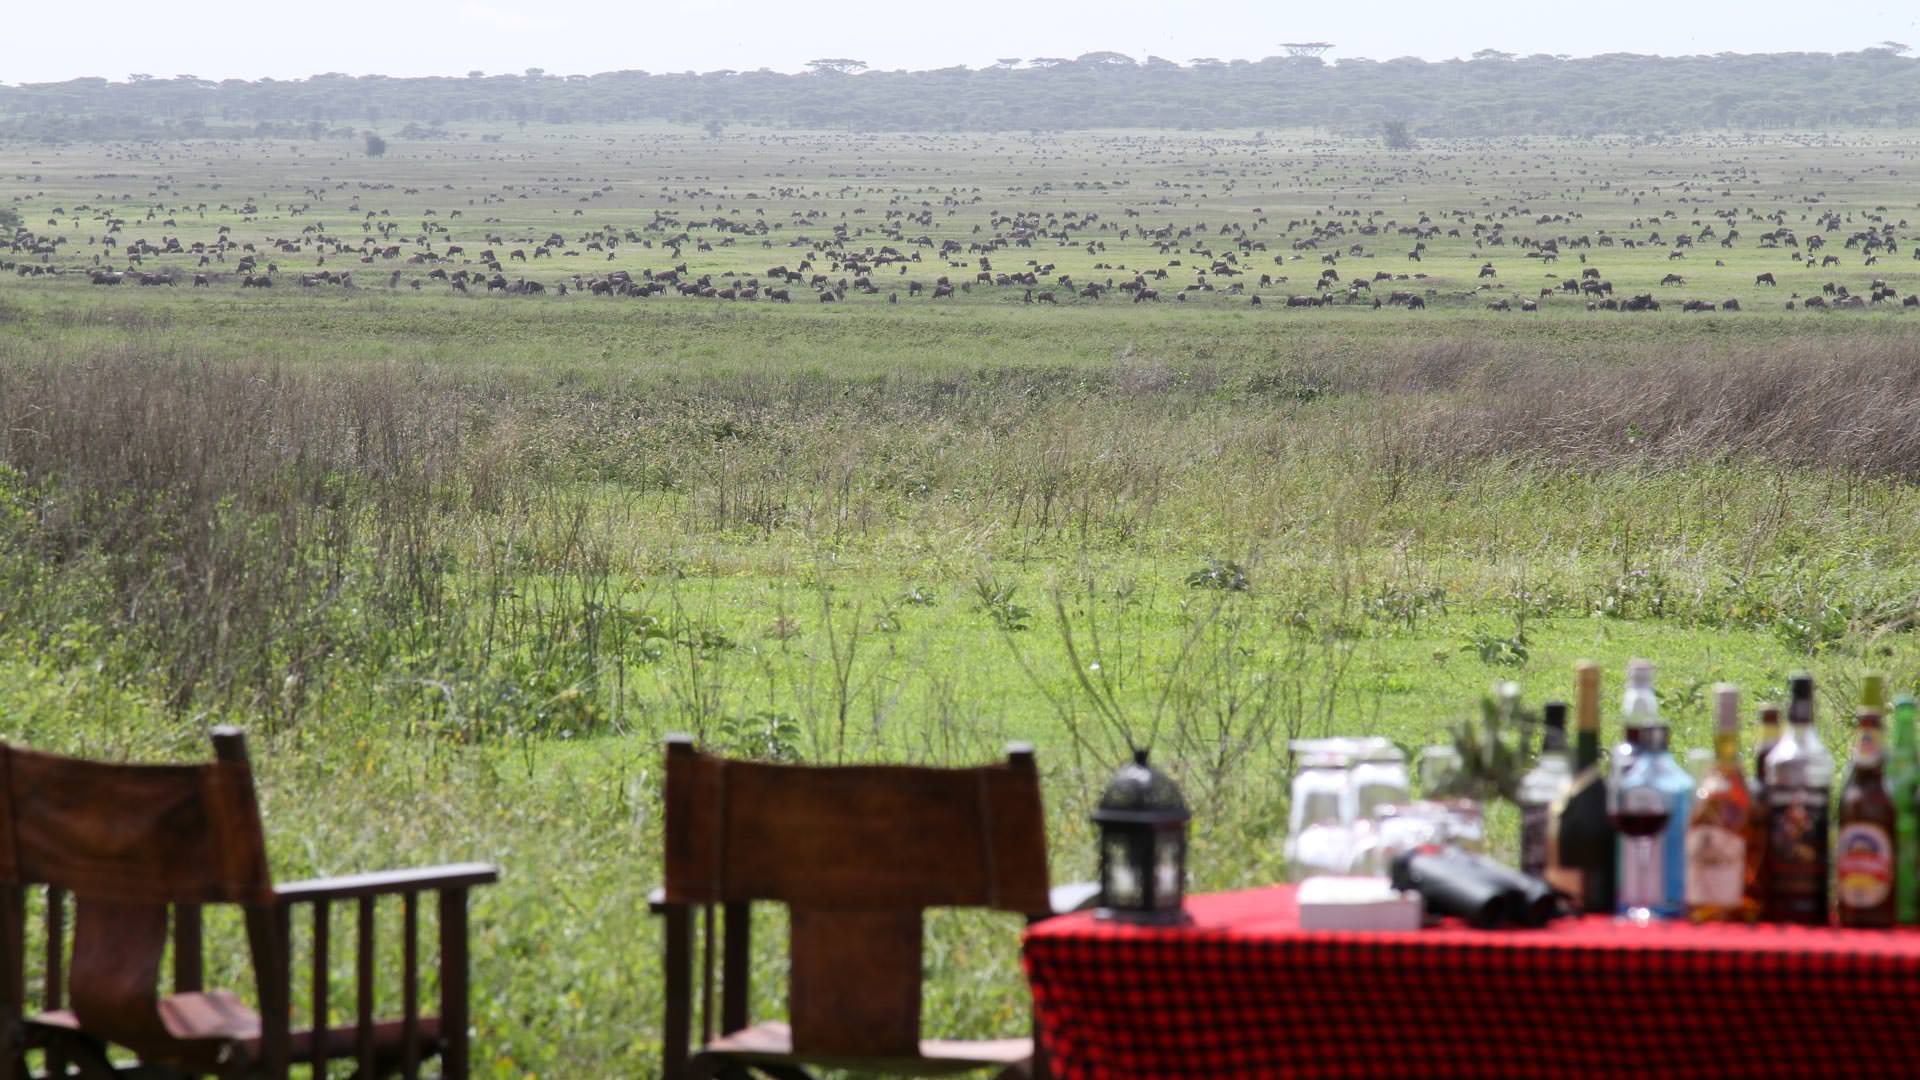 View to wildebeest herds